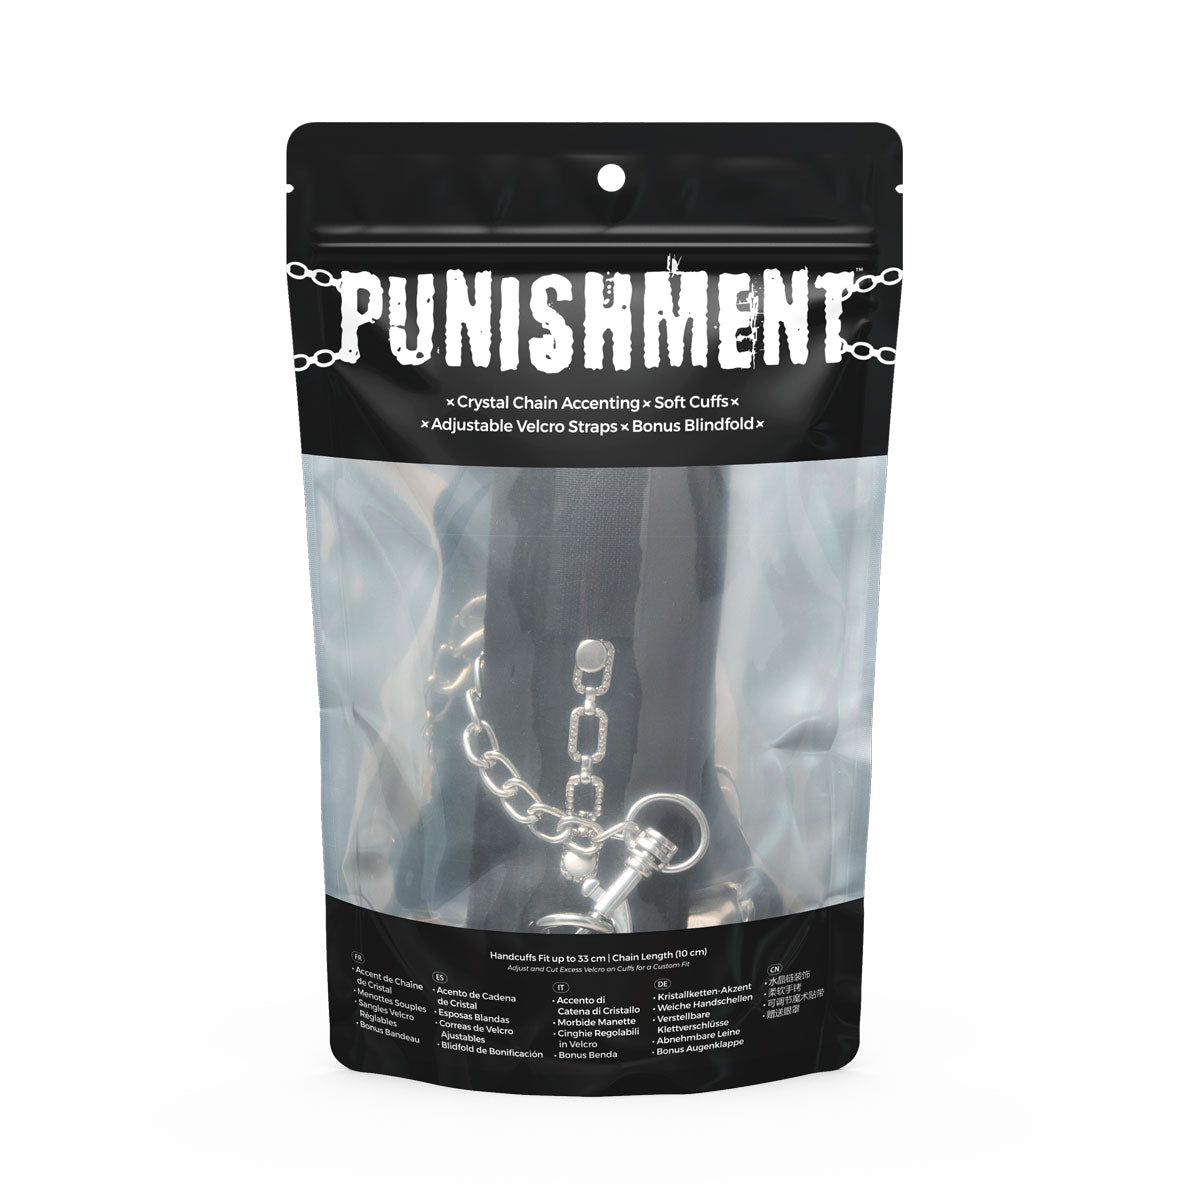 Punishment Crystal Detail Handcuffs - Black